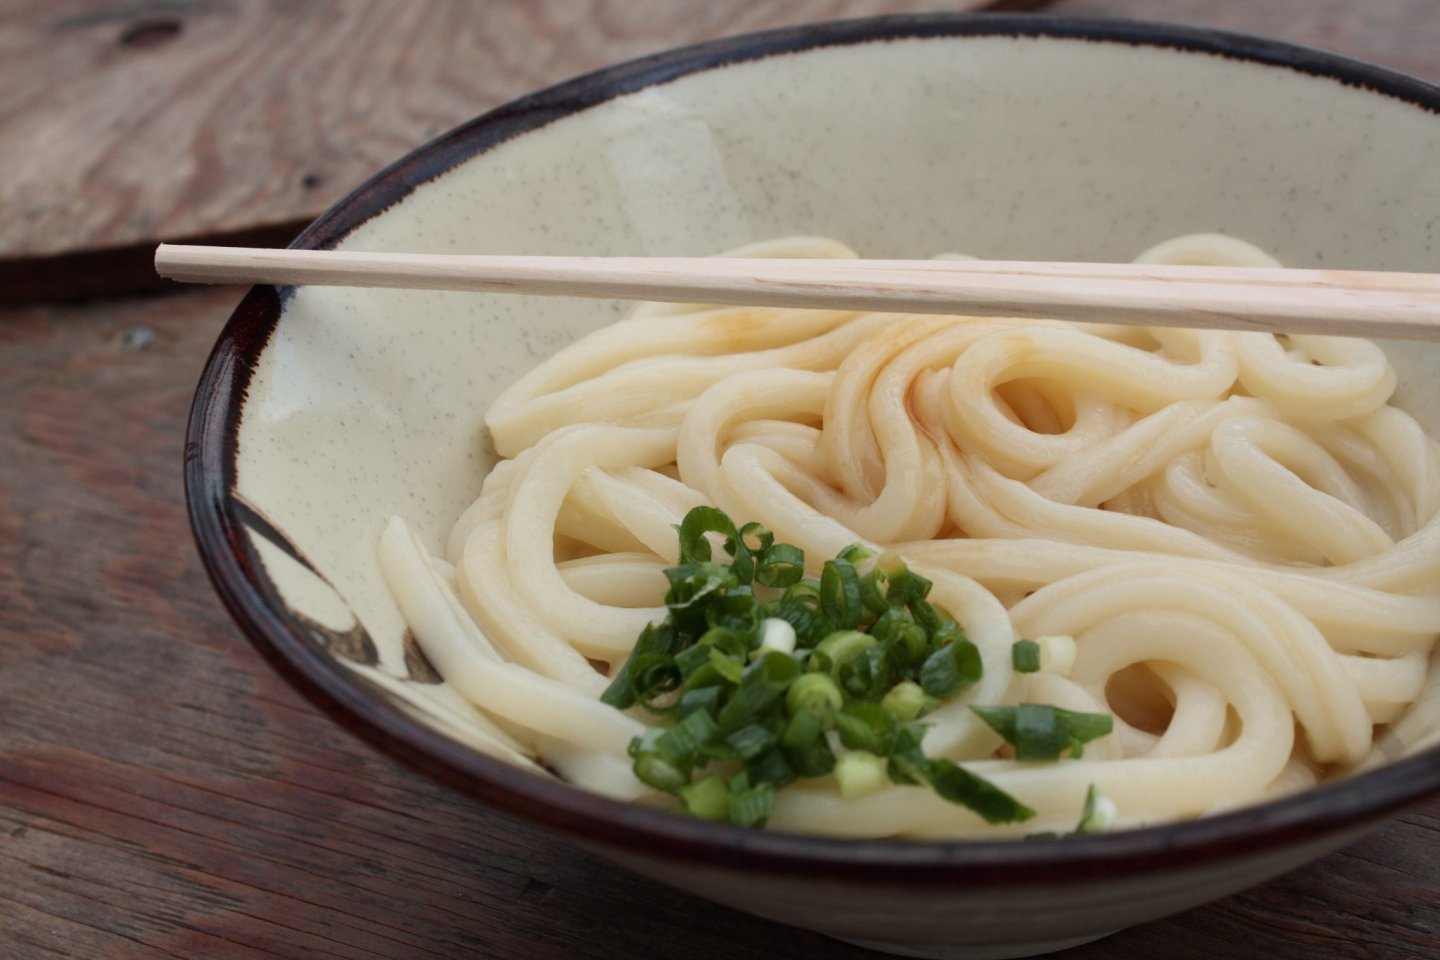 Sanuki udon noodles